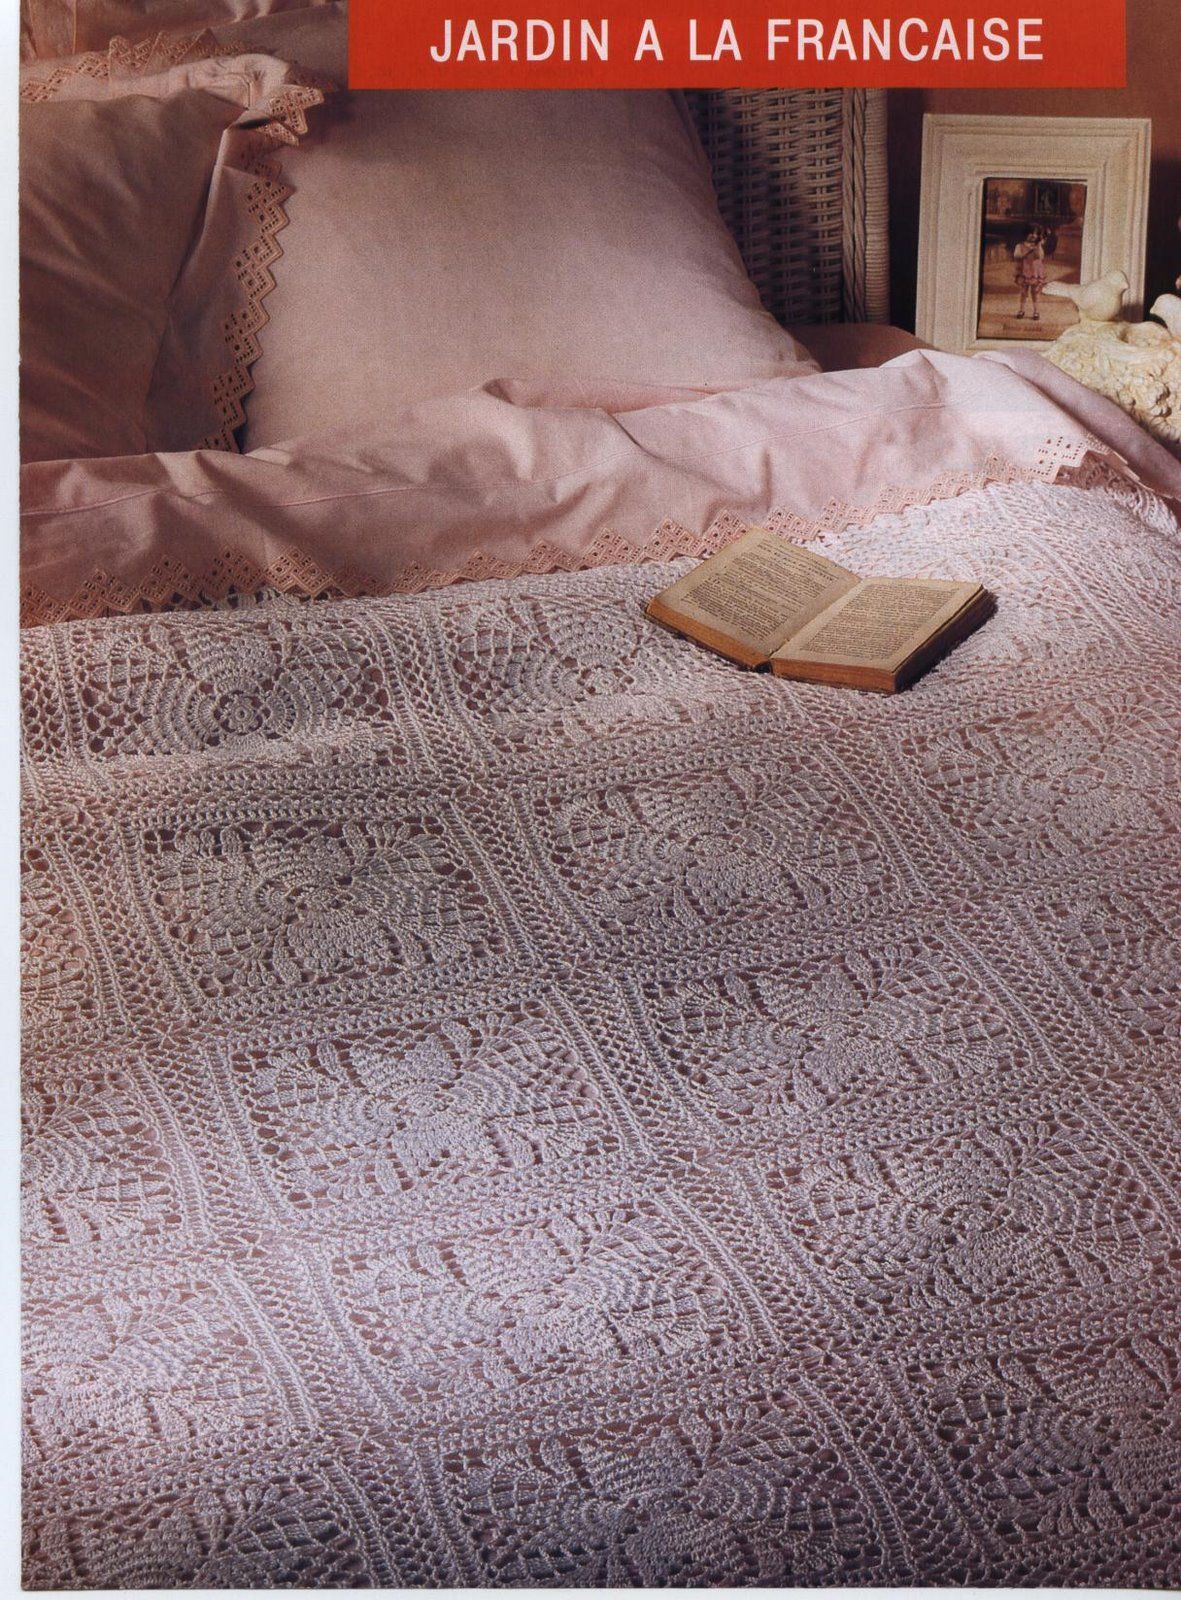 Crochet bedspread big squared modules (1)